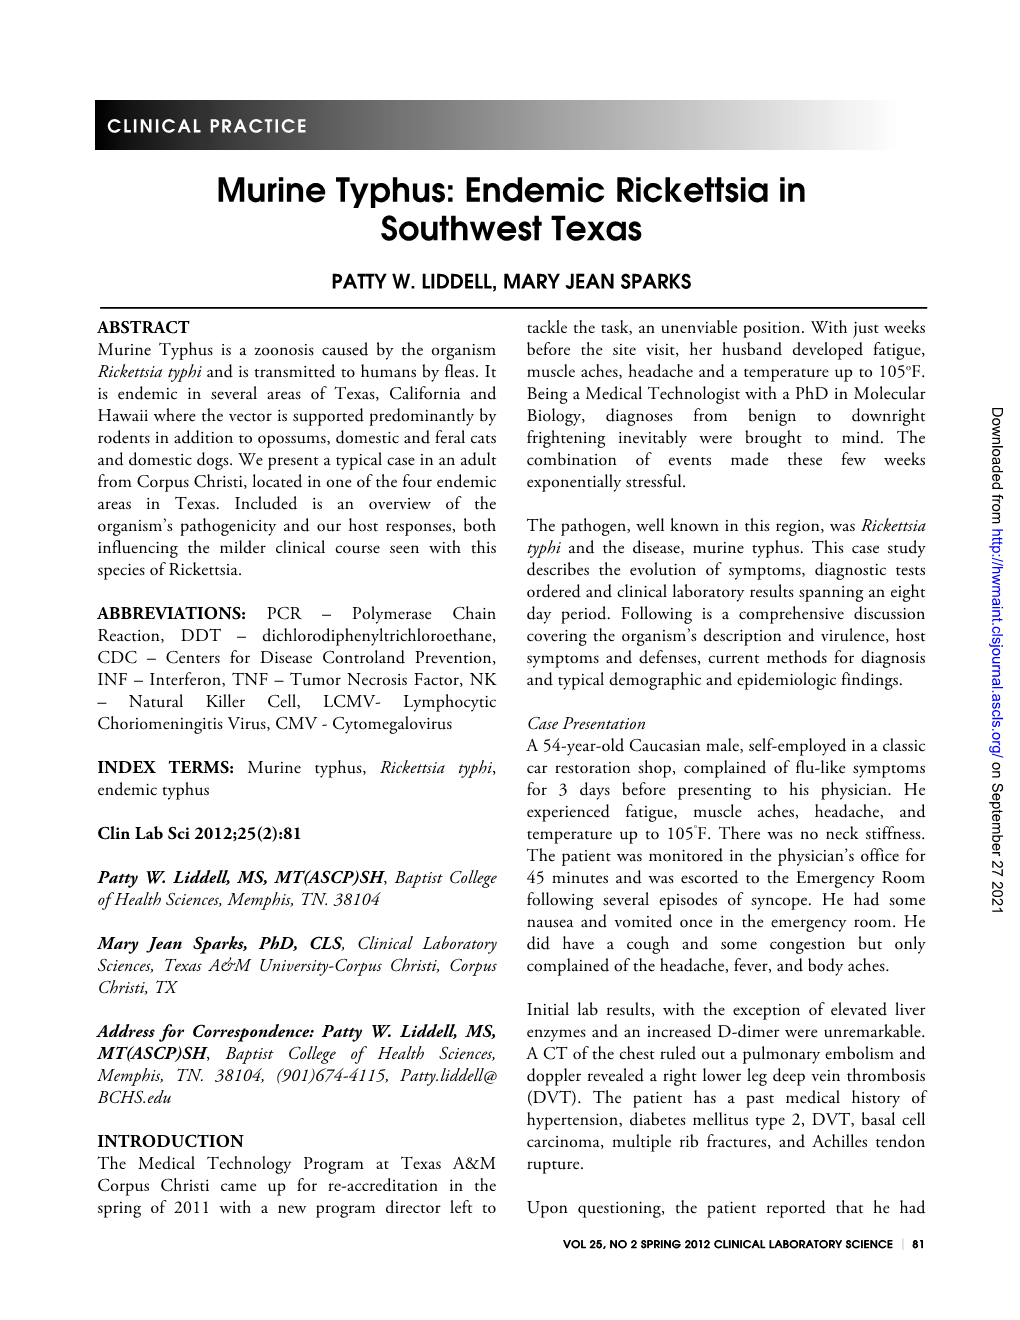 Murine Typhus: Endemic Rickettsia in Southwest Texas